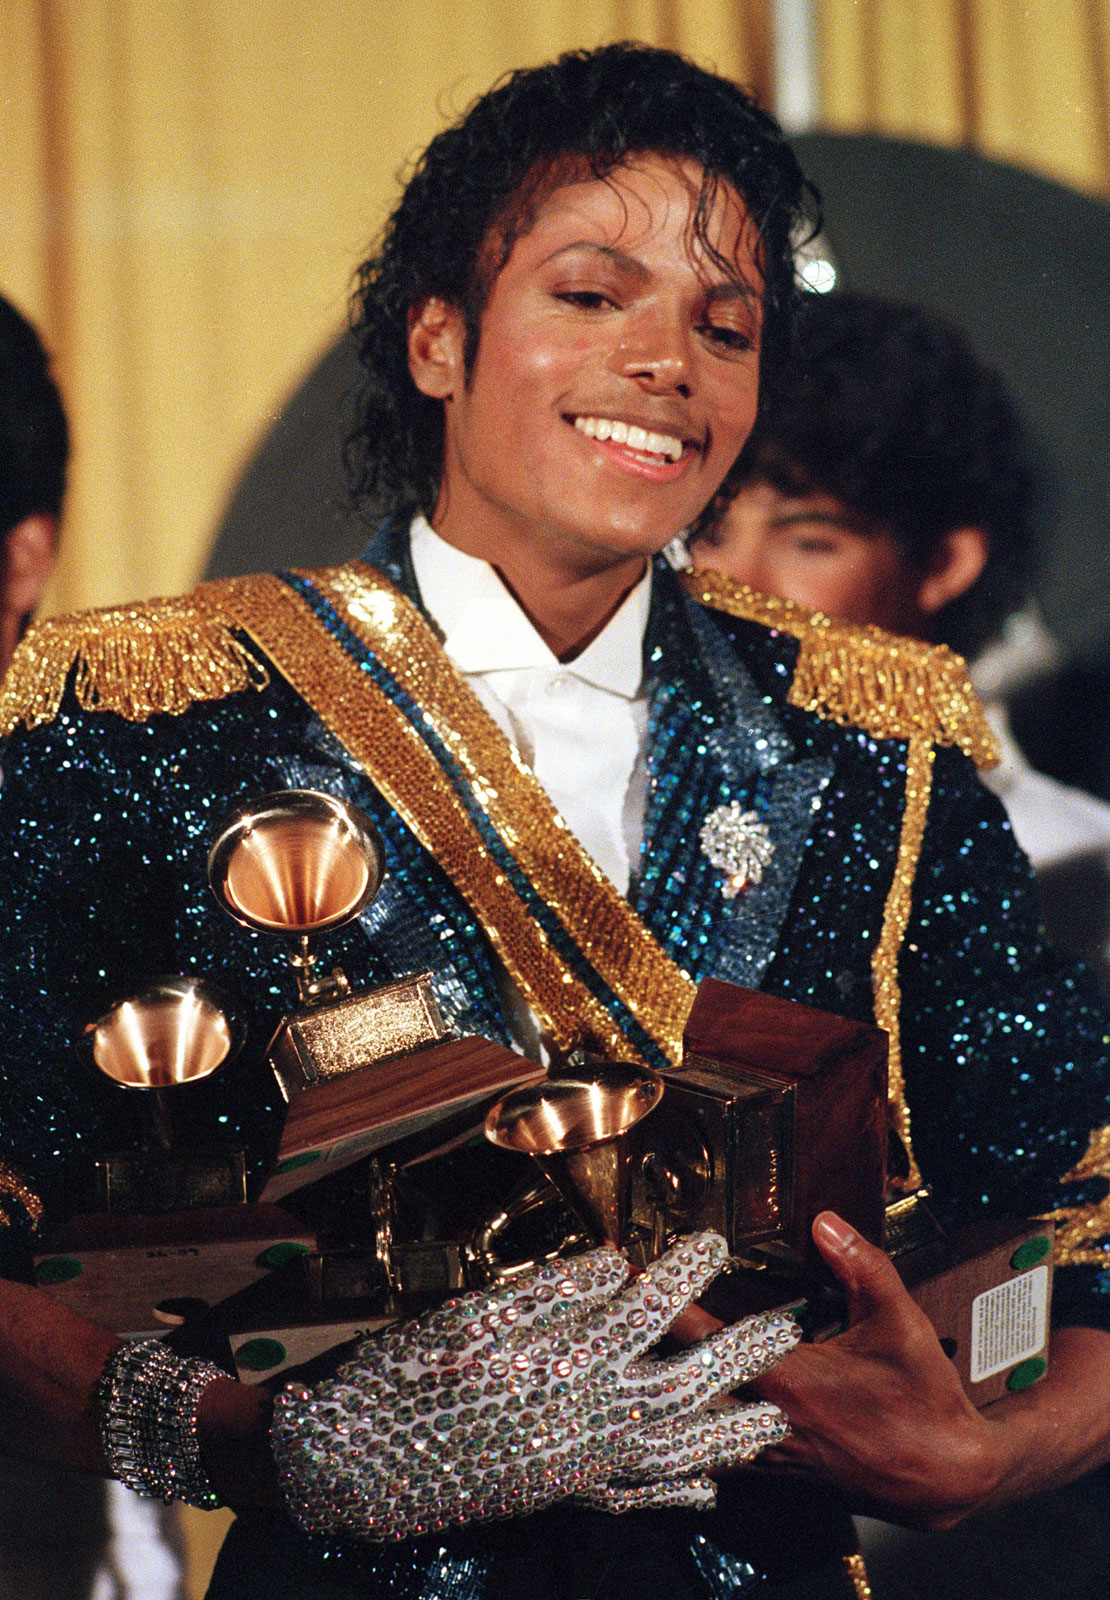 Michael-Jackson-Grammy-Awards-1984.jpg